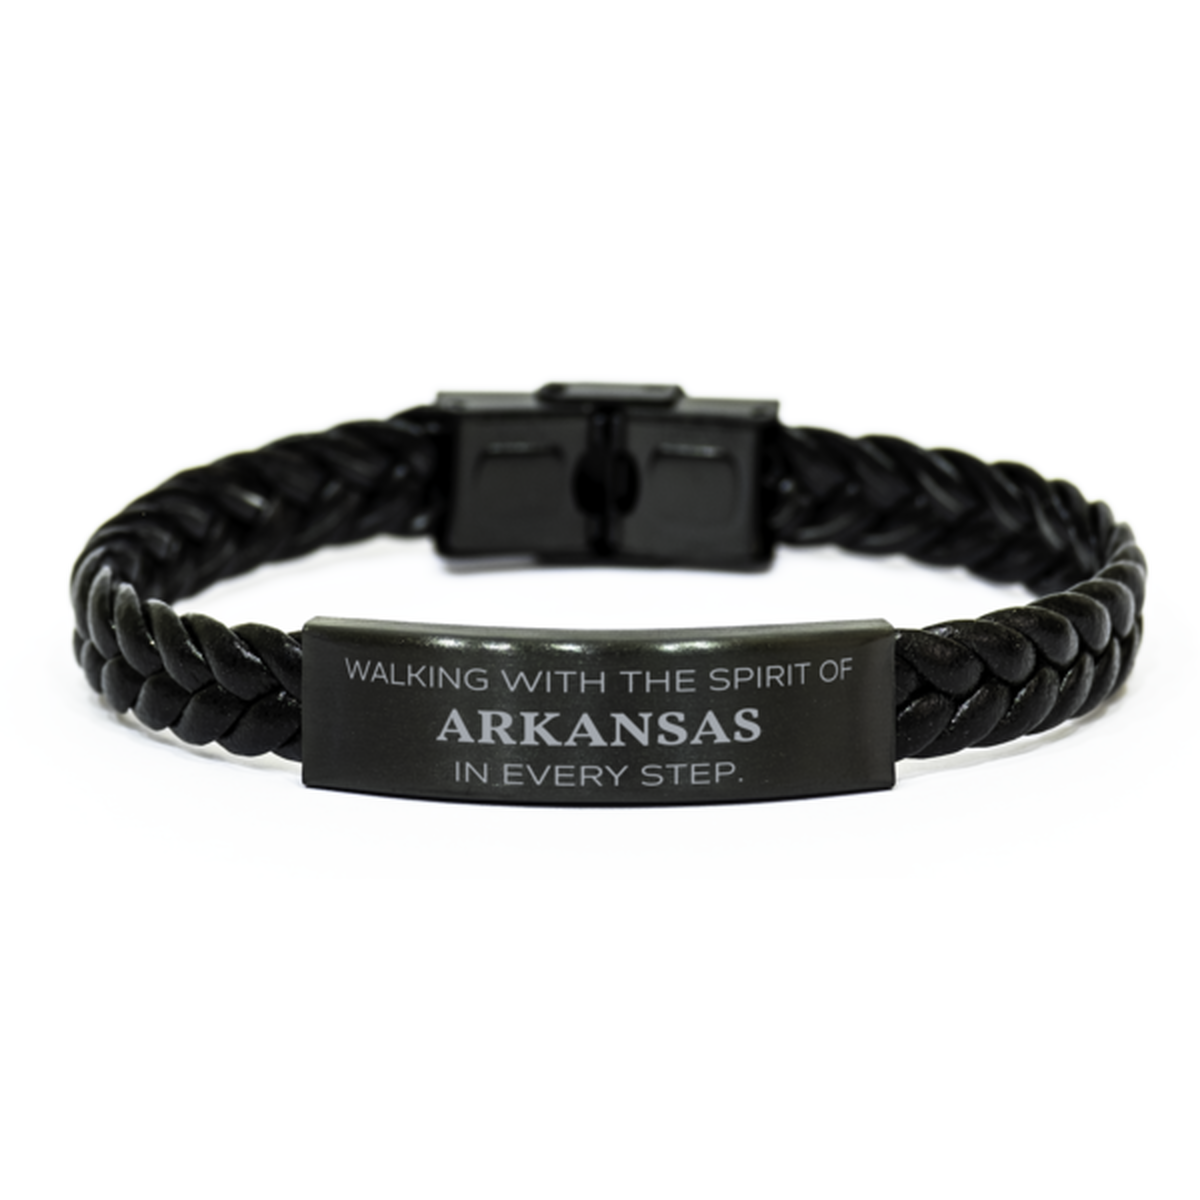 Arkansas Gifts, Walking with the spirit, Love Arkansas Birthday Christmas Braided Leather Bracelet For Arkansas People, Men, Women, Friends